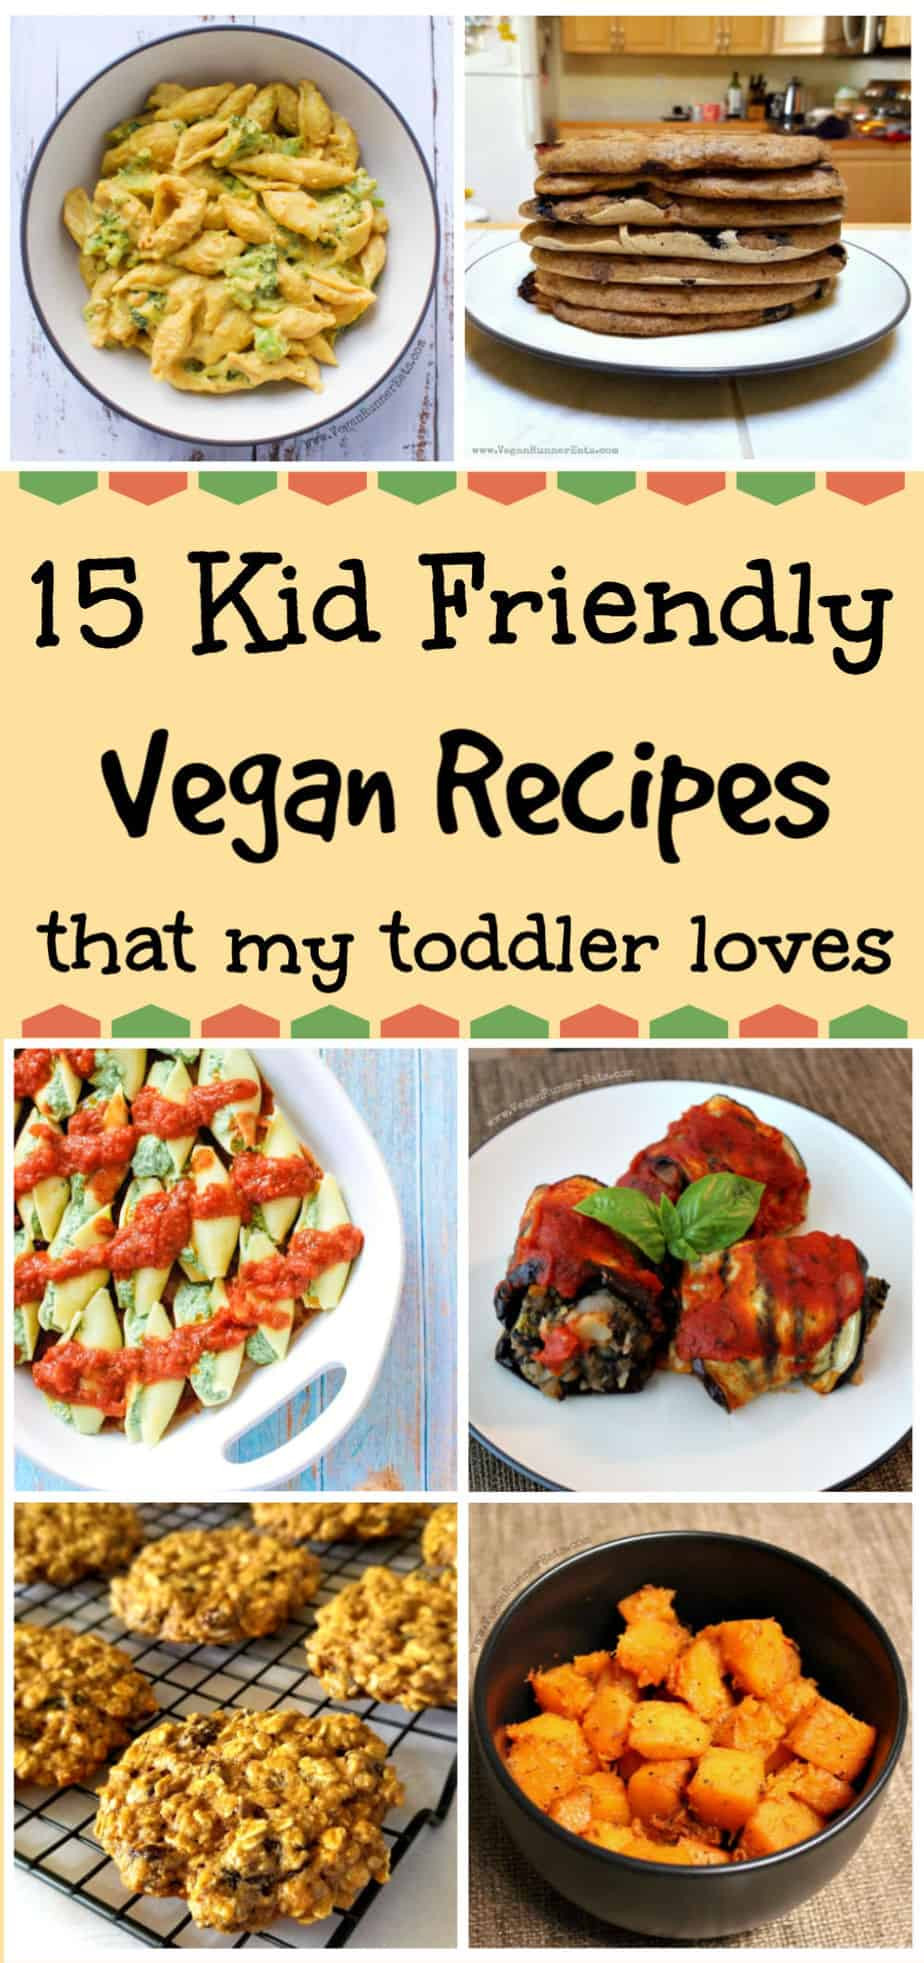 Children Vegan Recipes
 15 Kid Friendly Vegan Recipes My Toddler Can t Get Enough